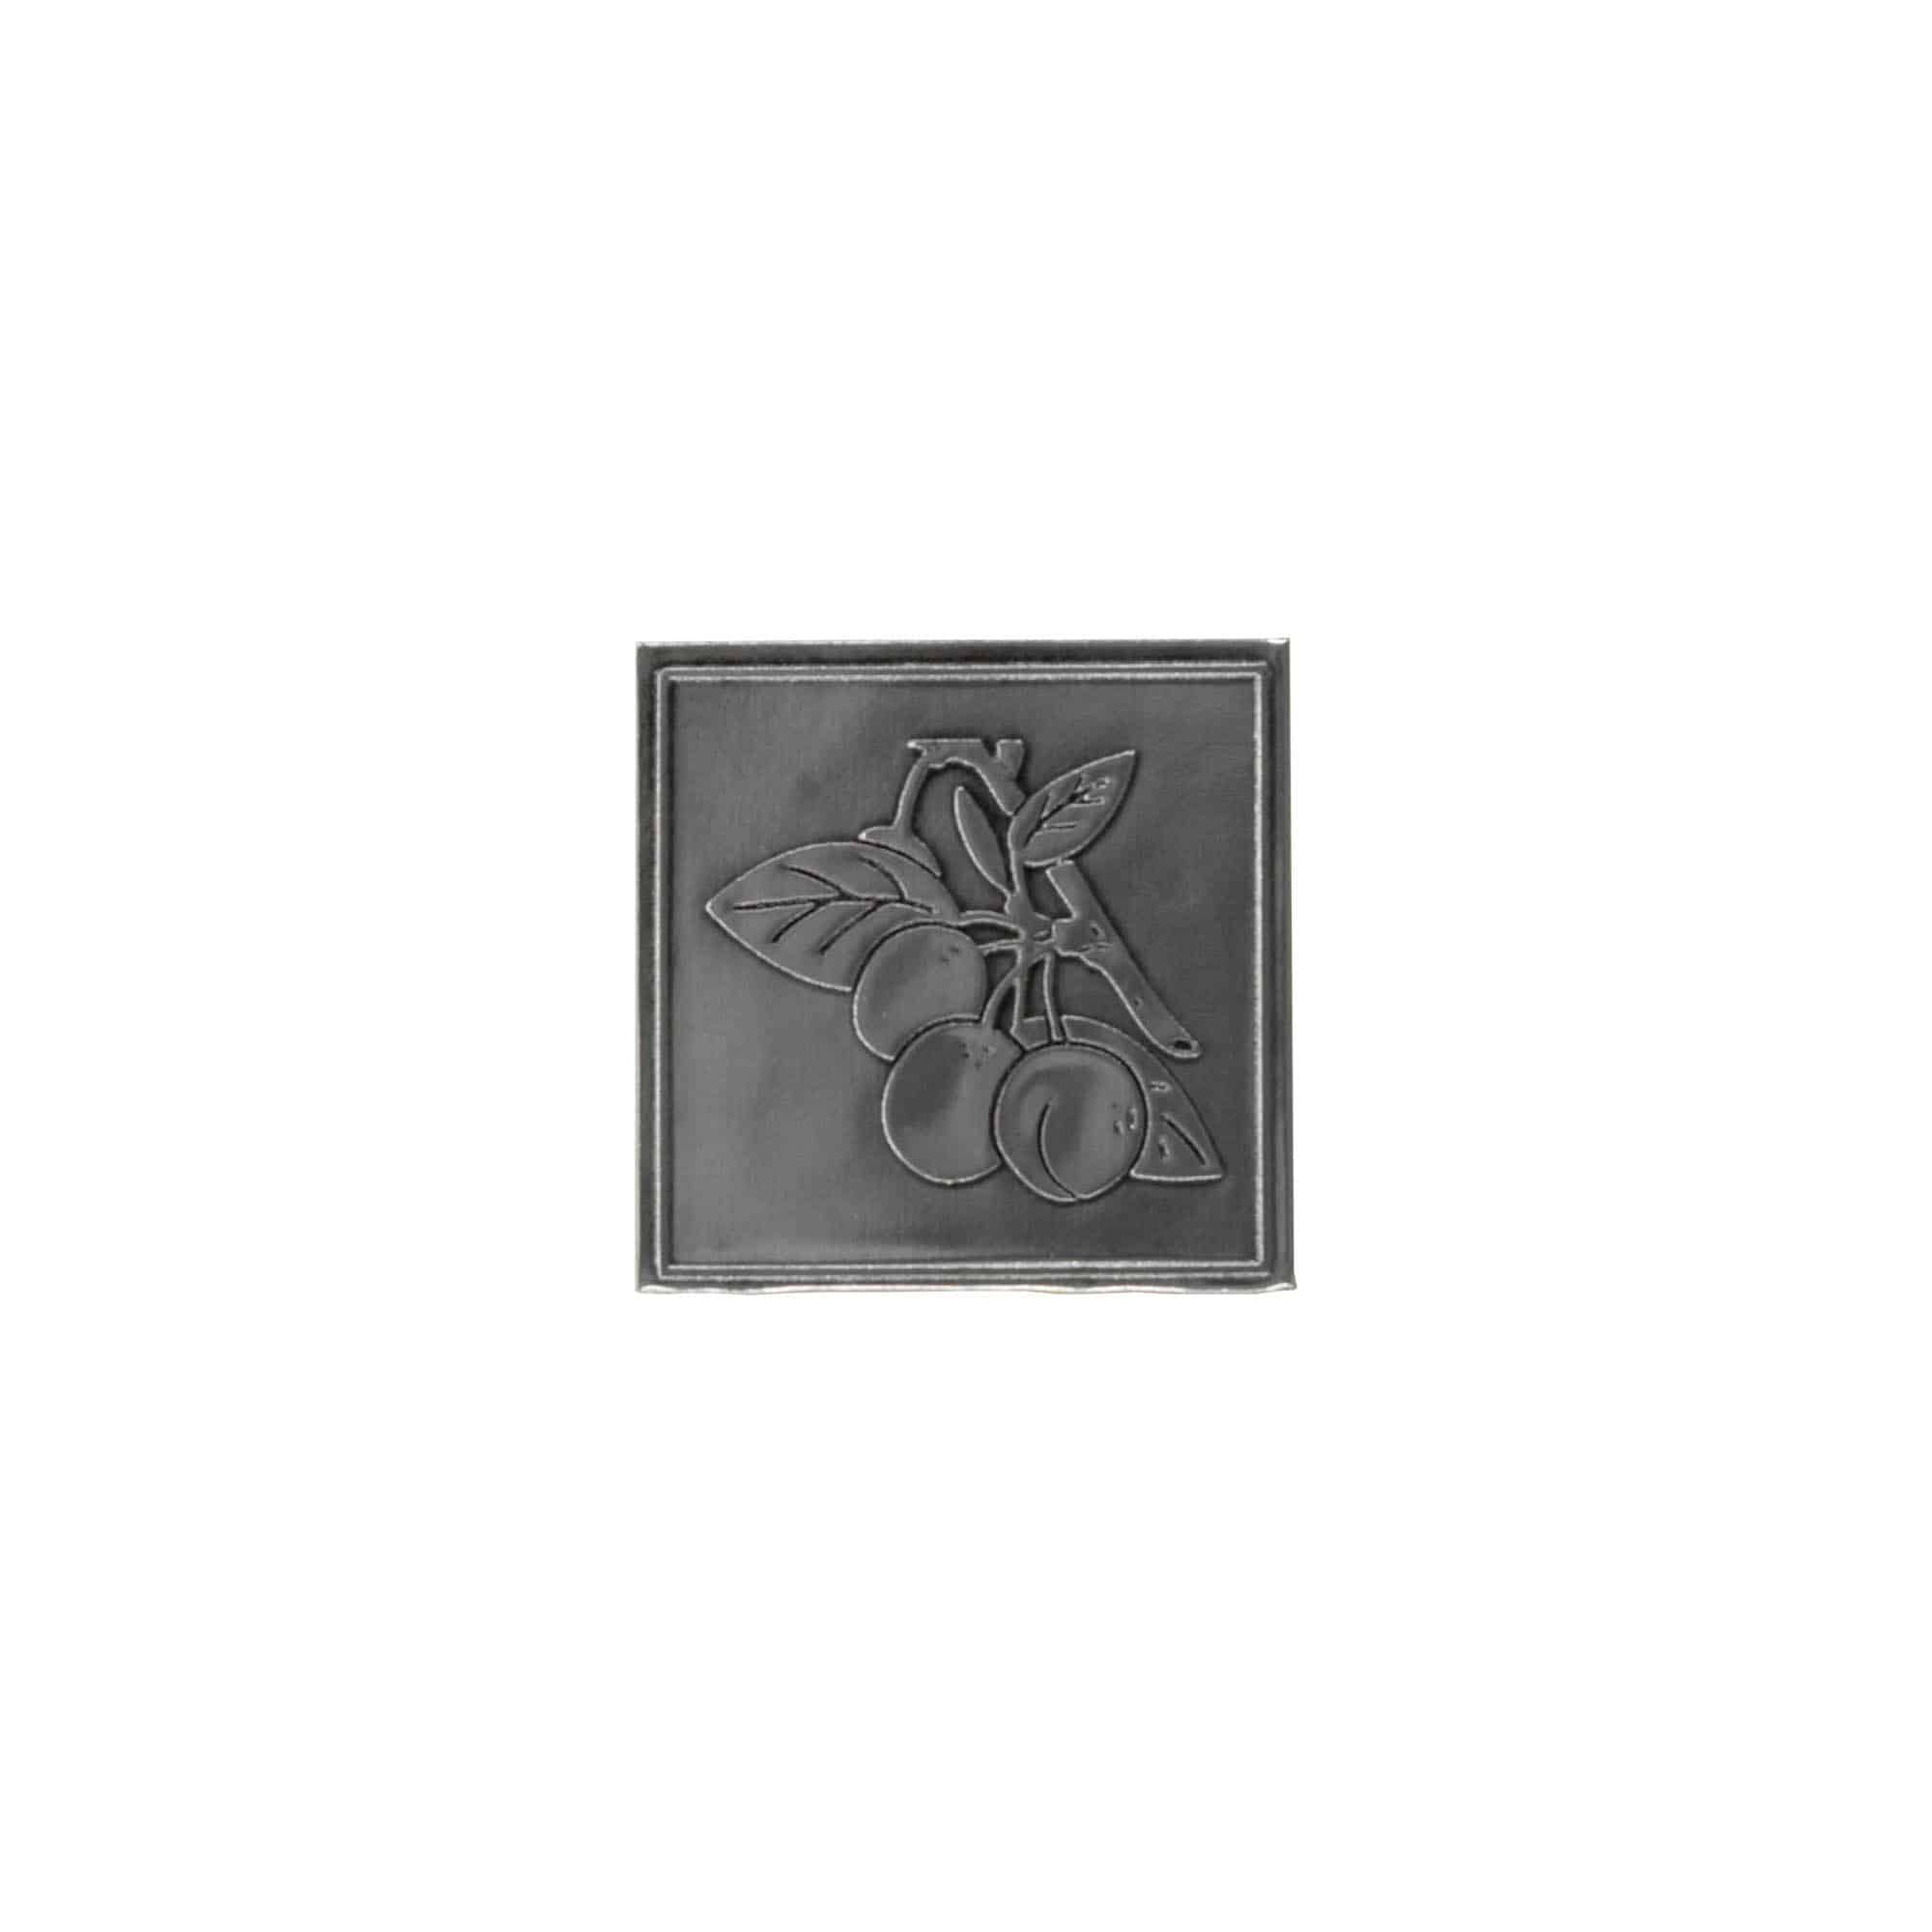 Etykieta cynowa 'Mirabelka', kwadratowa, metal, kolor srebrny